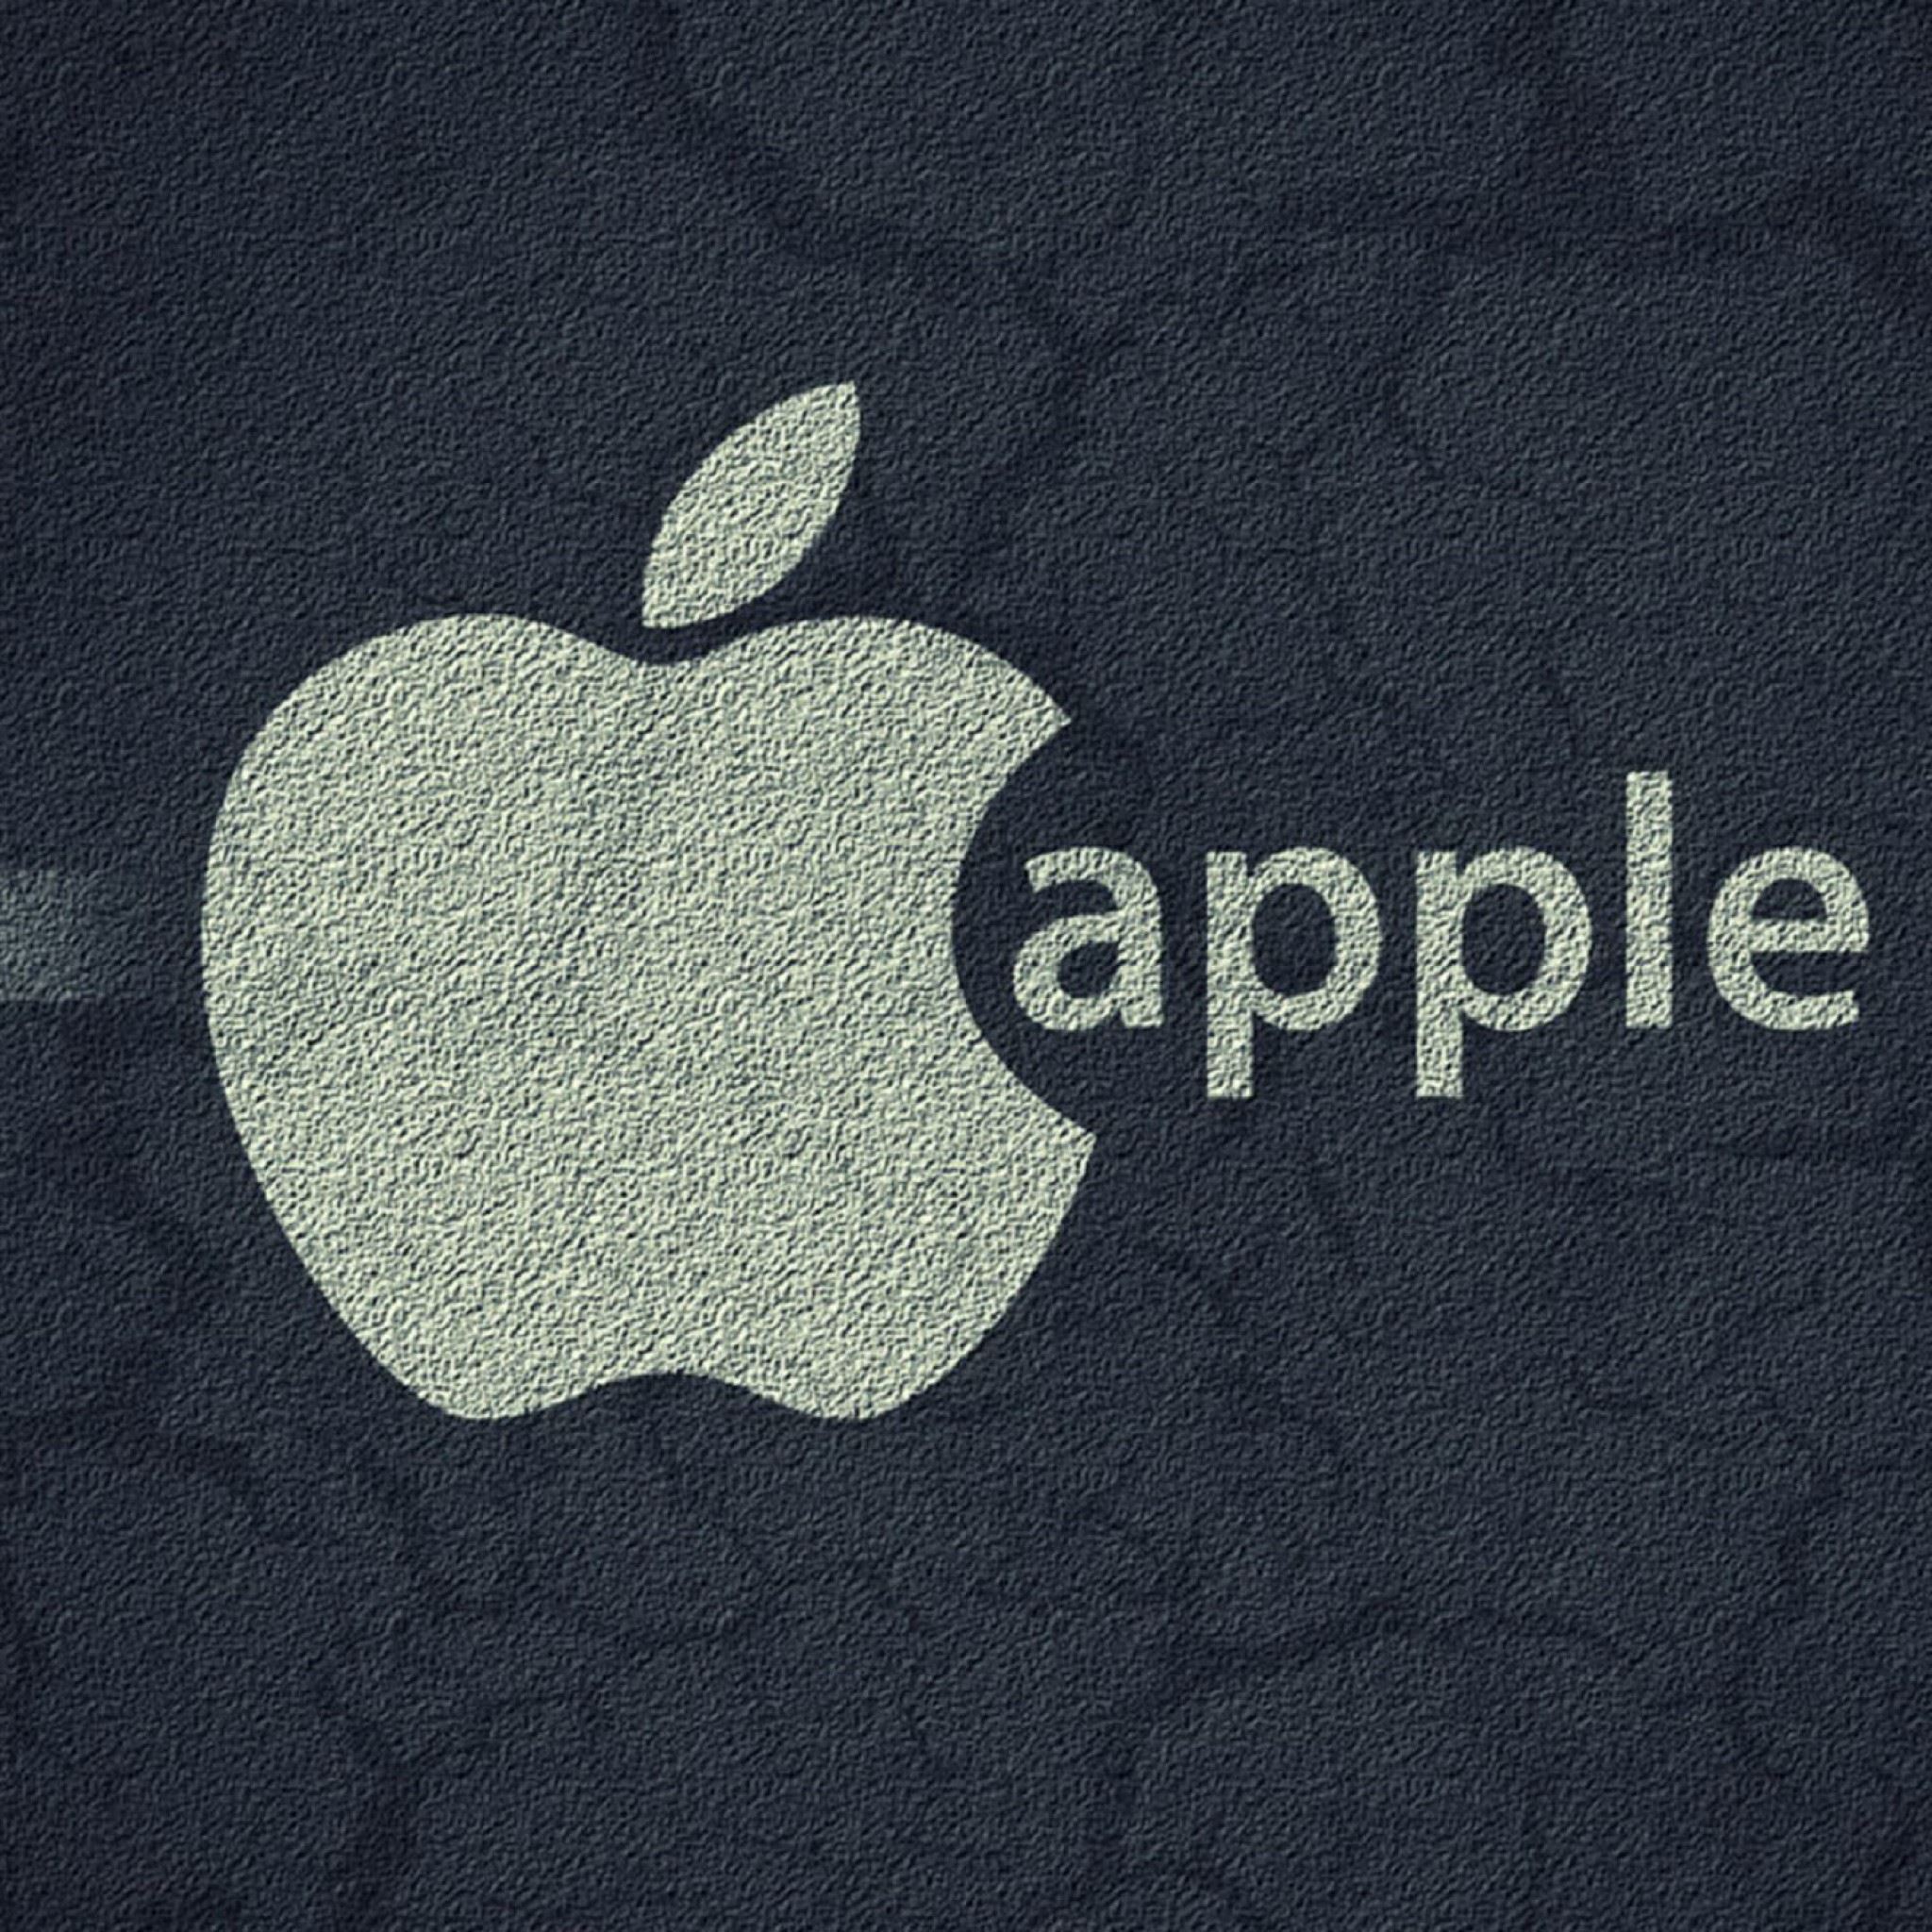 Apple Design iPad Air wallpaper 